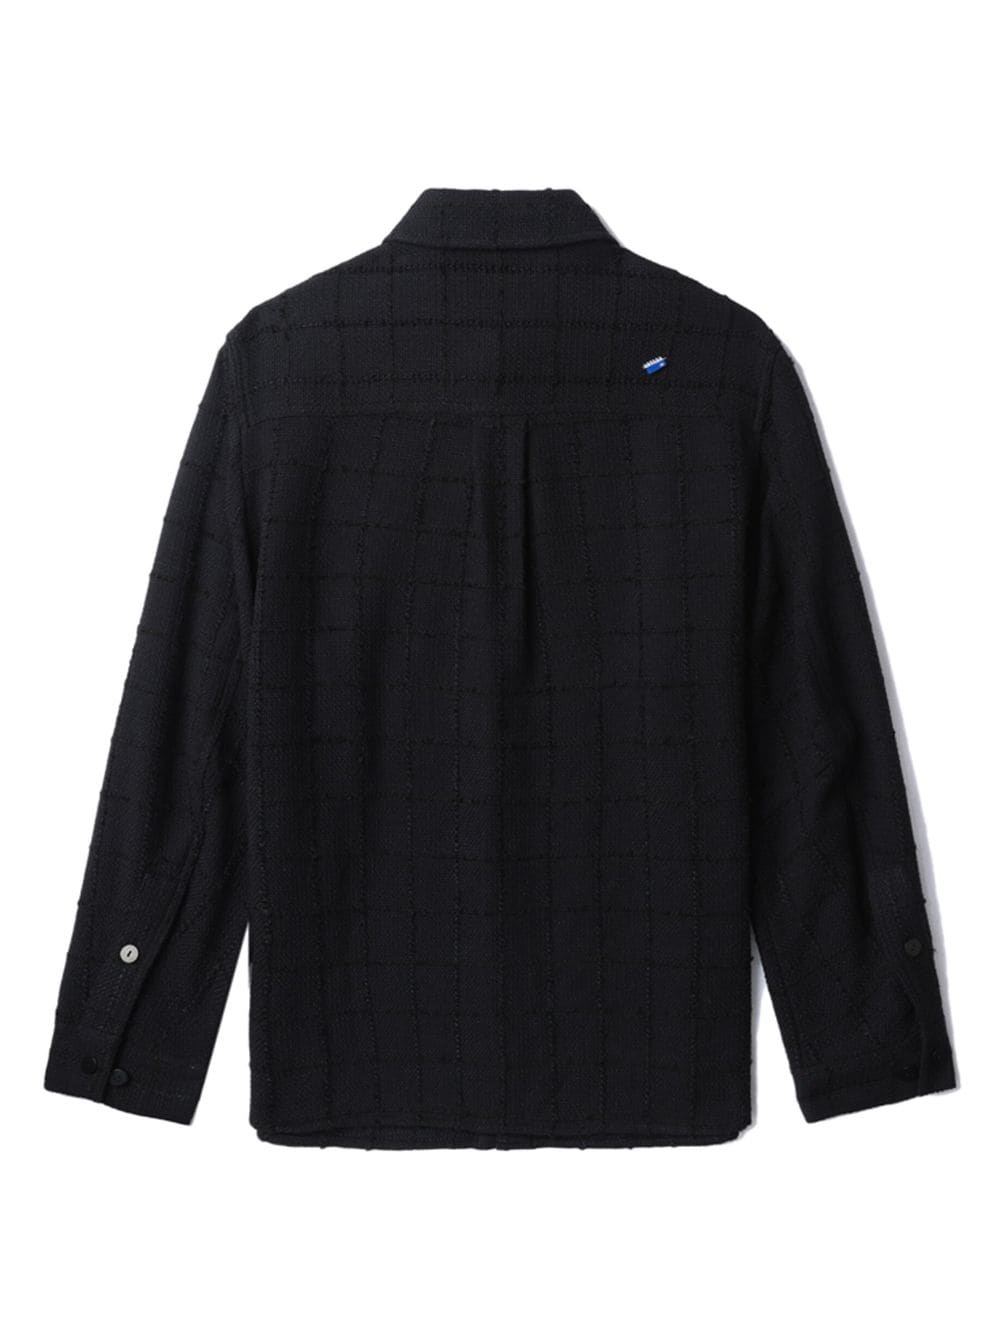 Lembu checkered shirt - 5